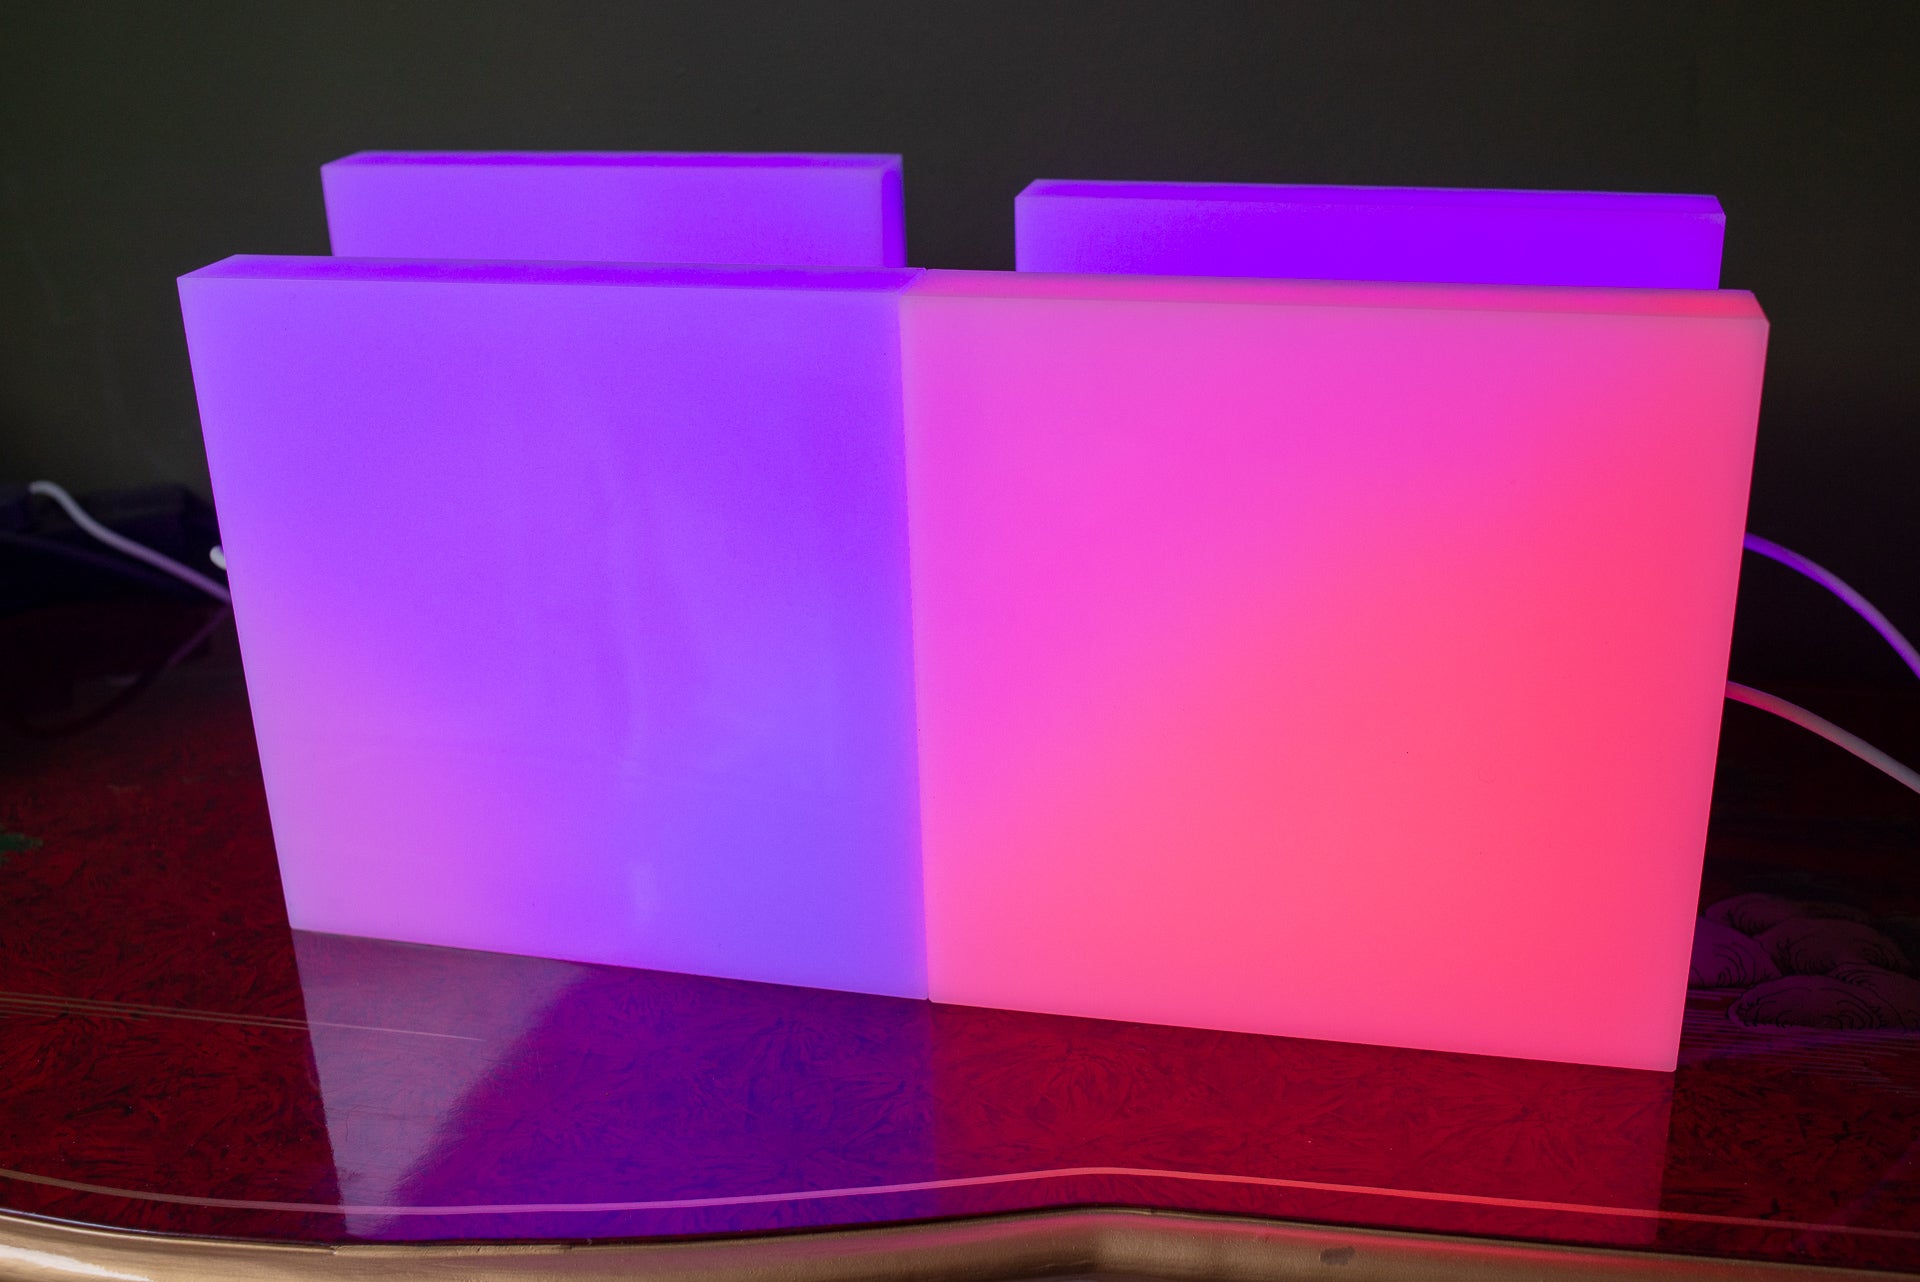 LIFX Tile smart lights displaying purple and pink colors.LIFX Tile LED panels displaying purple and pink colors.